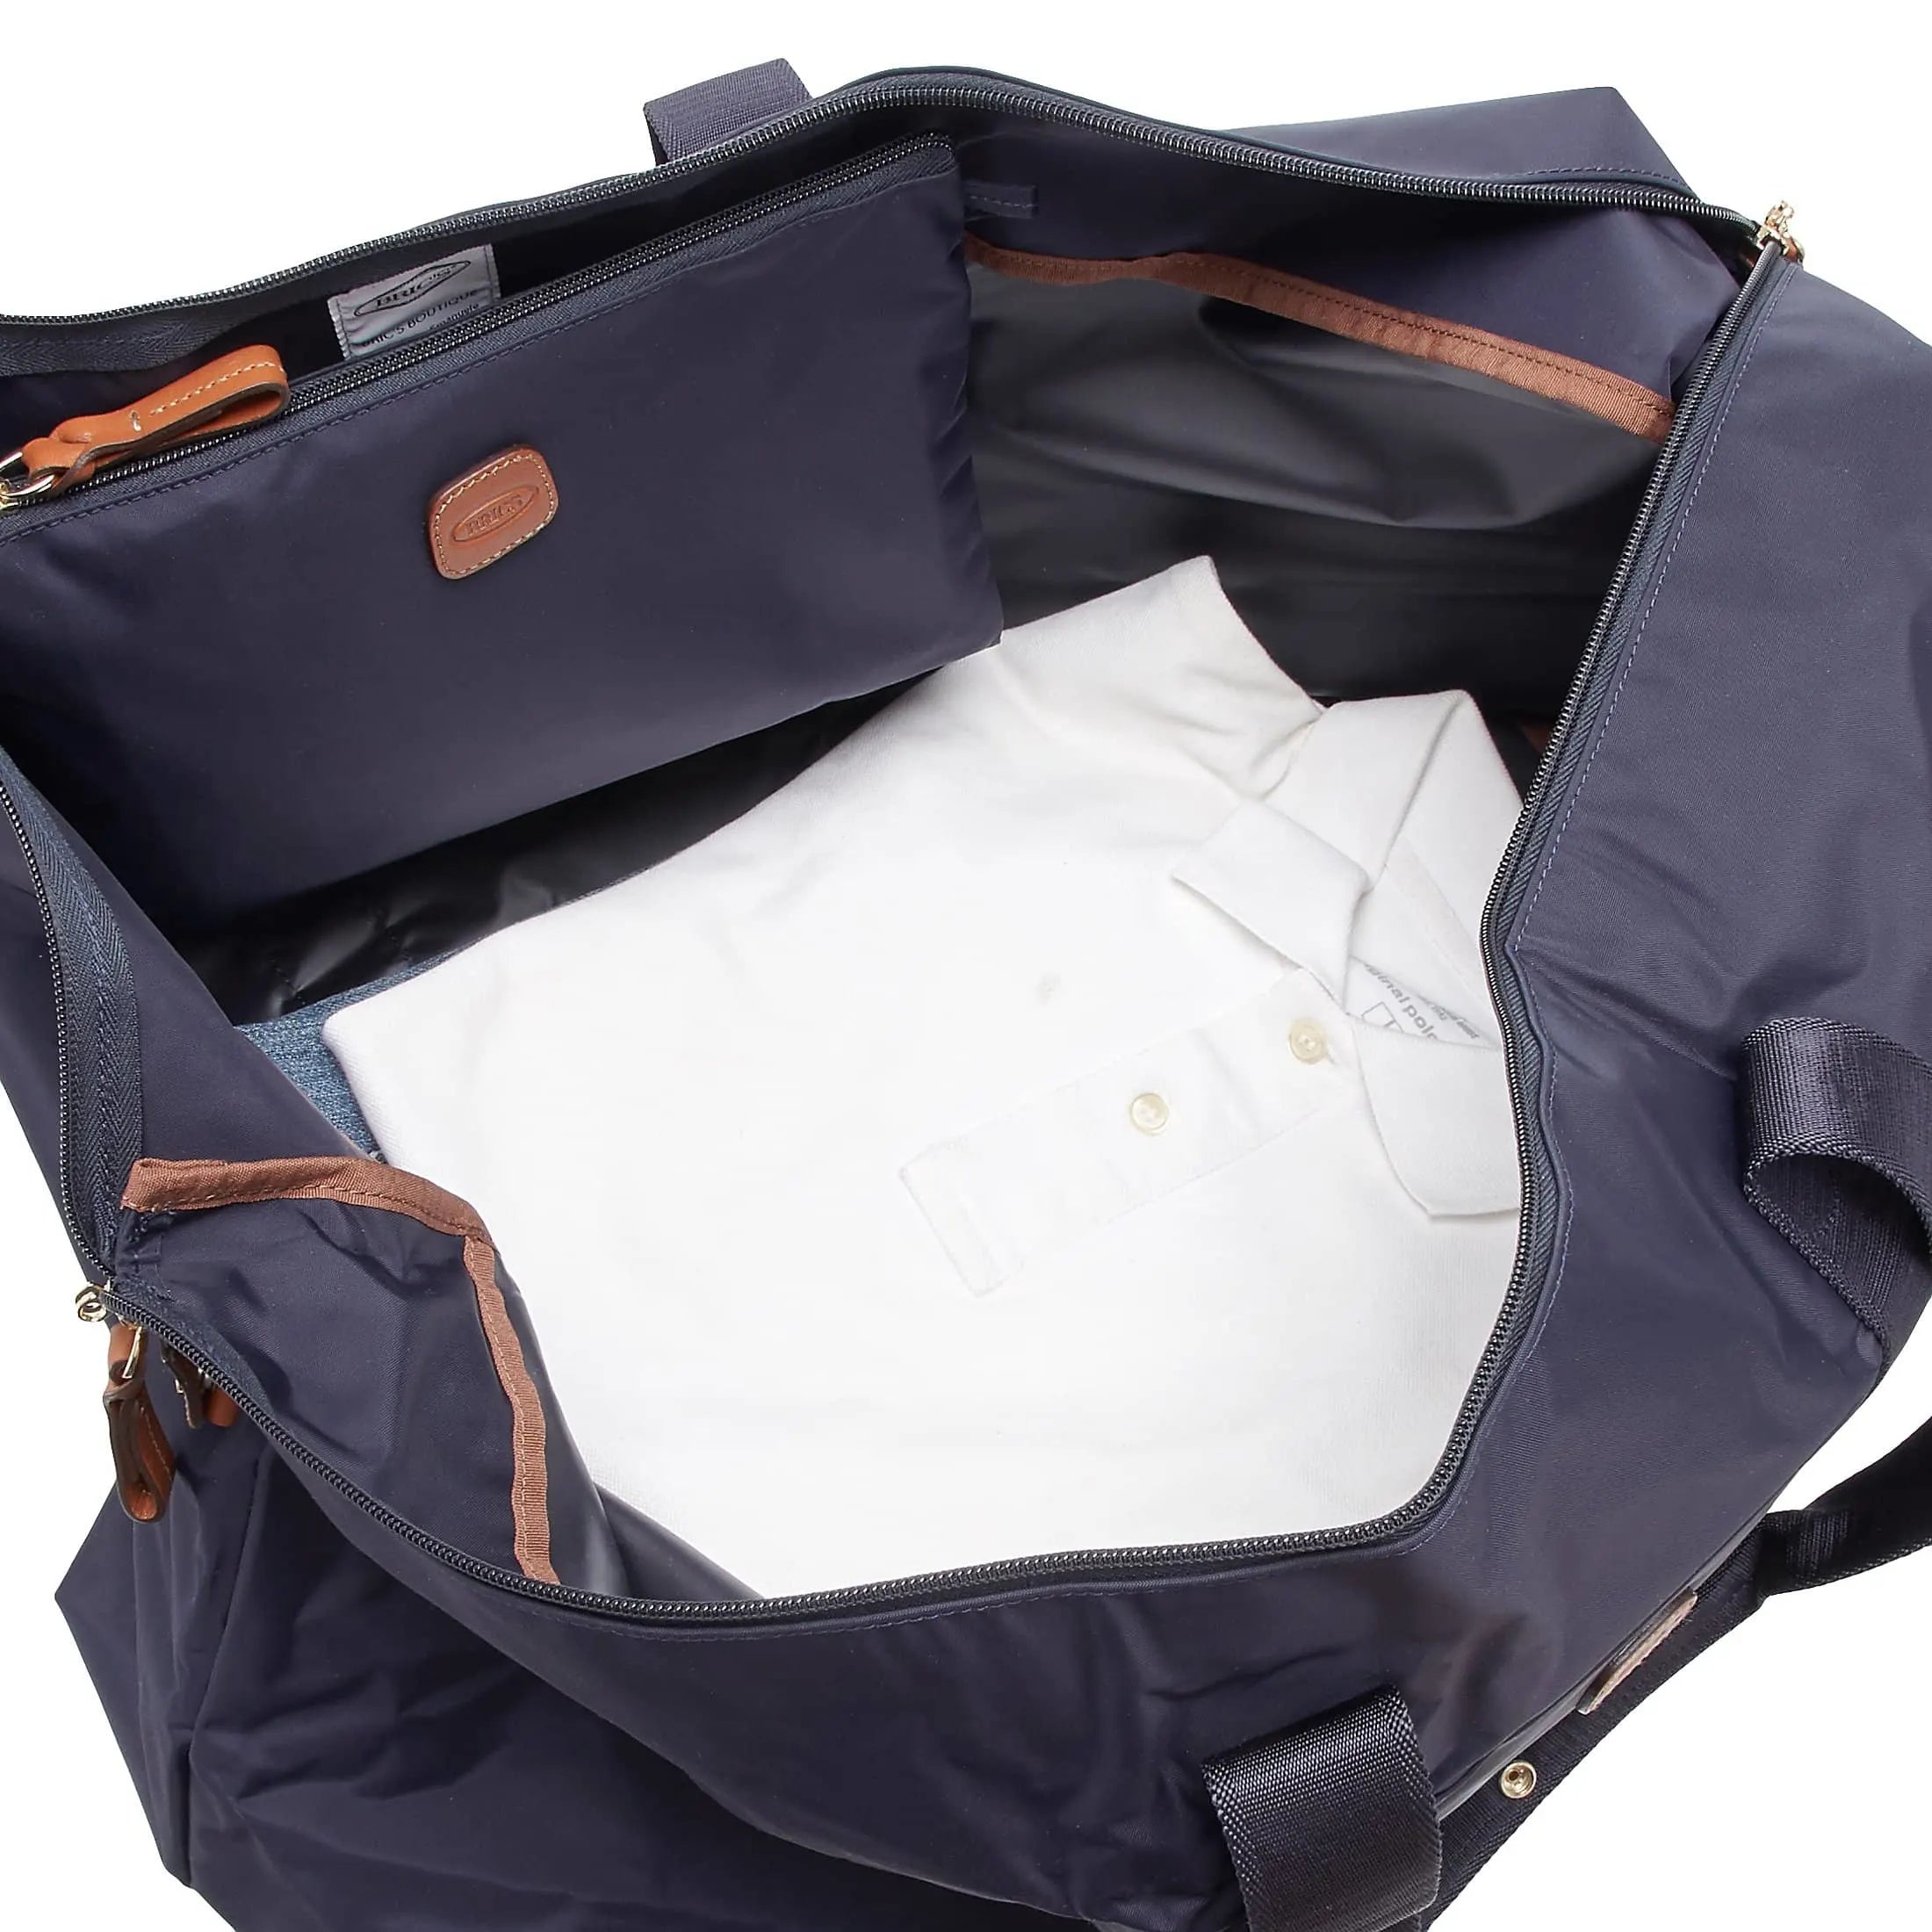 Brics X-Bag sac de voyage 55 cm - noir